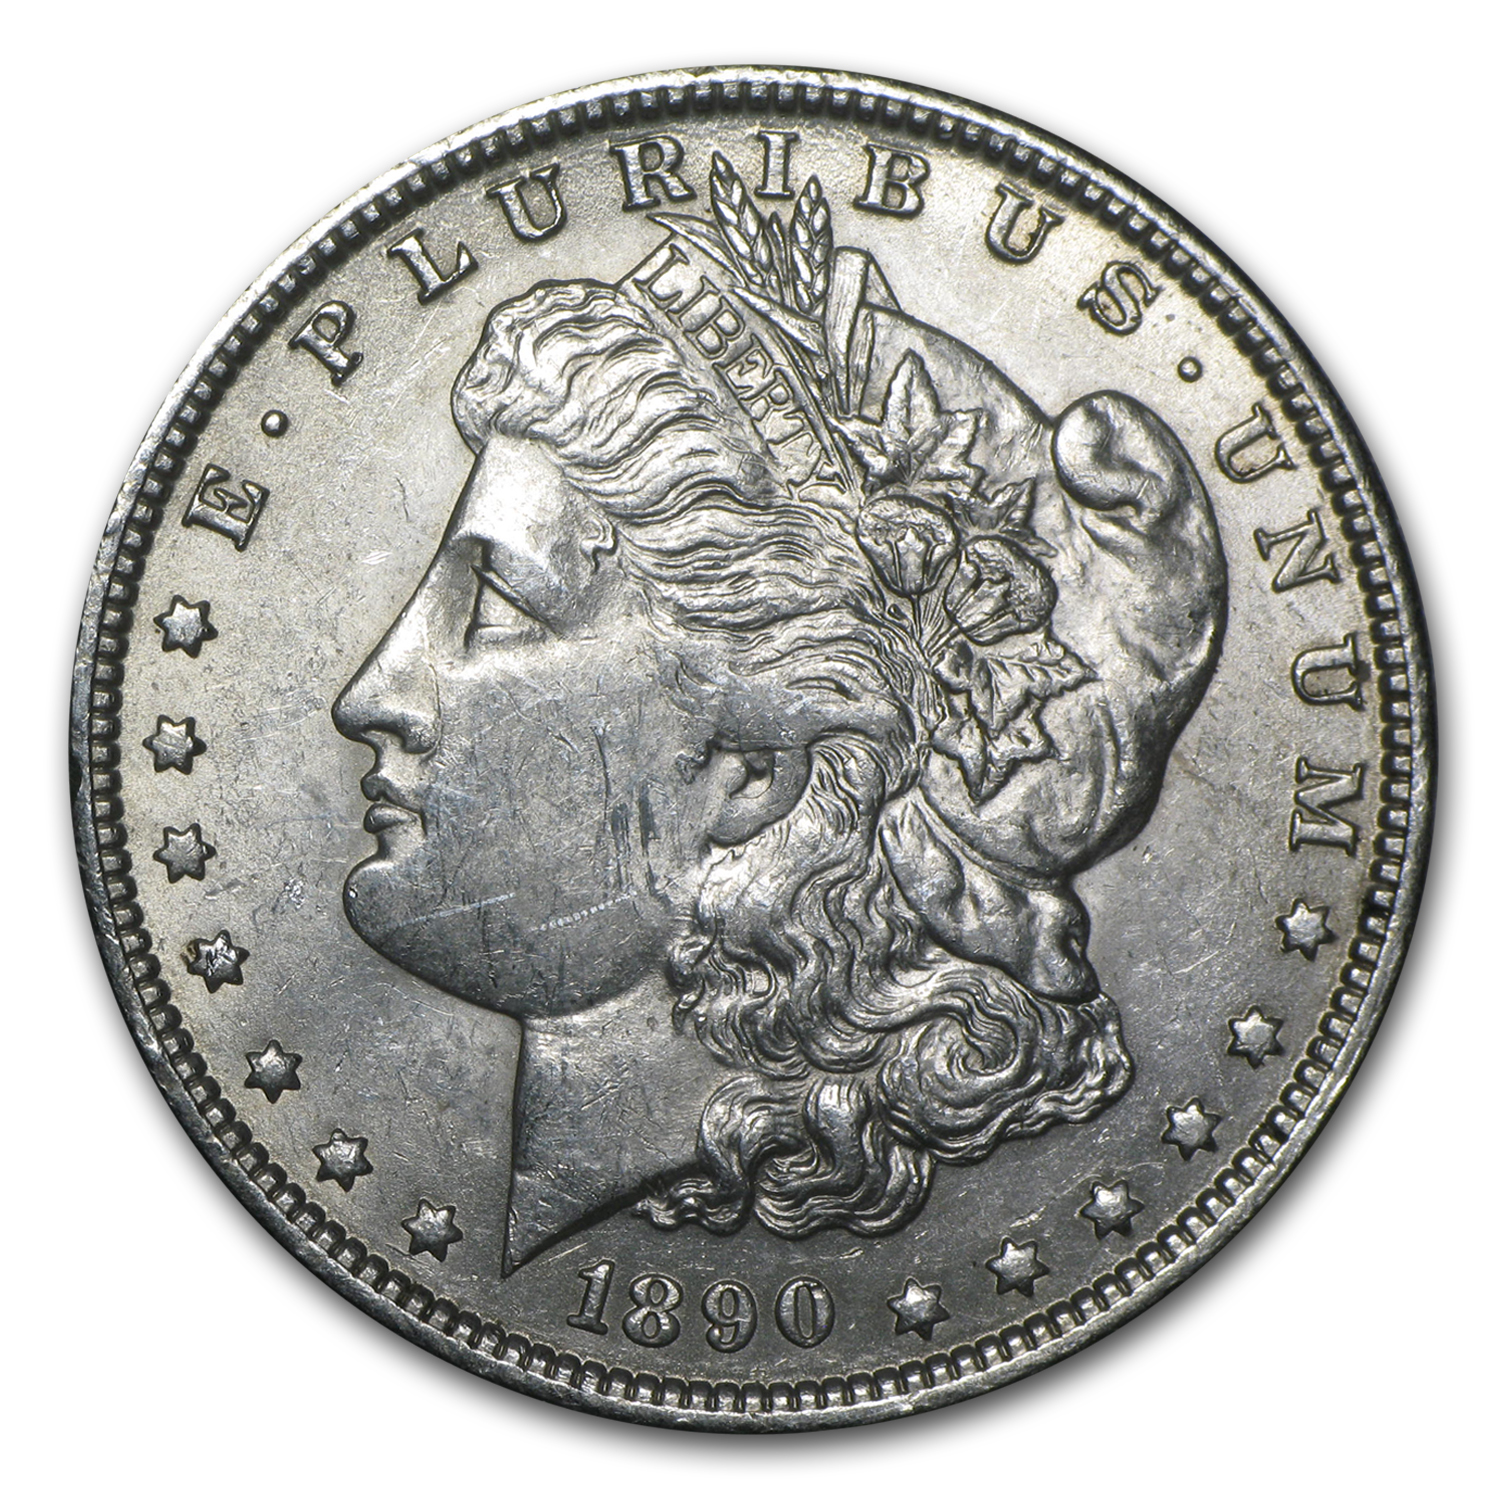 Buy 1890-O Morgan Dollar AU - Click Image to Close